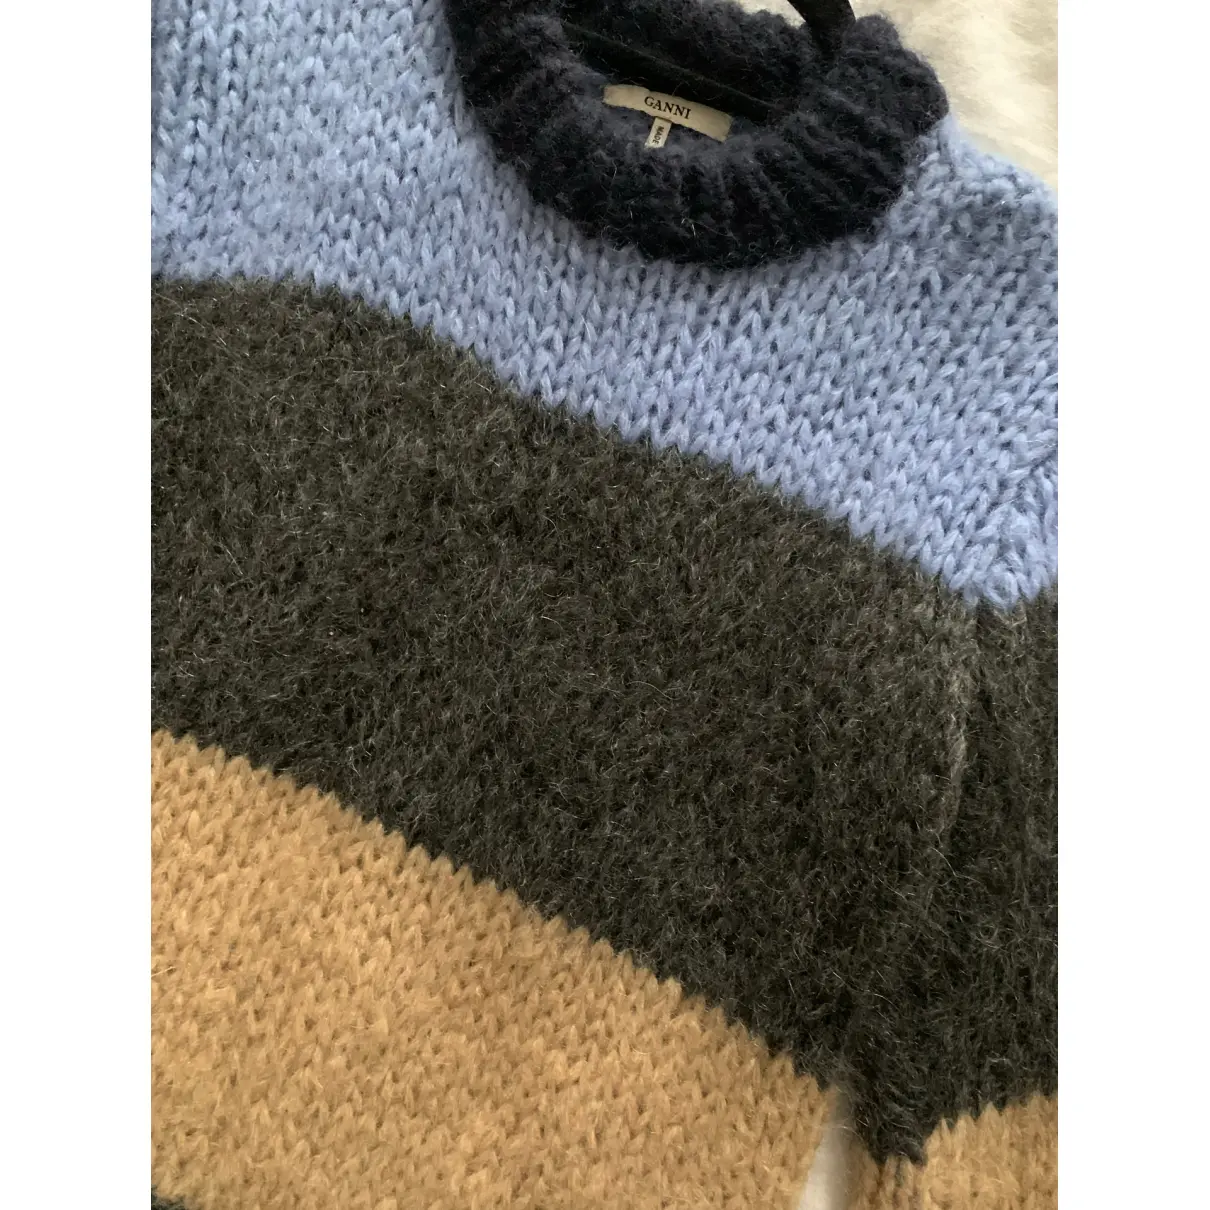 Buy Ganni Julliard wool jumper online